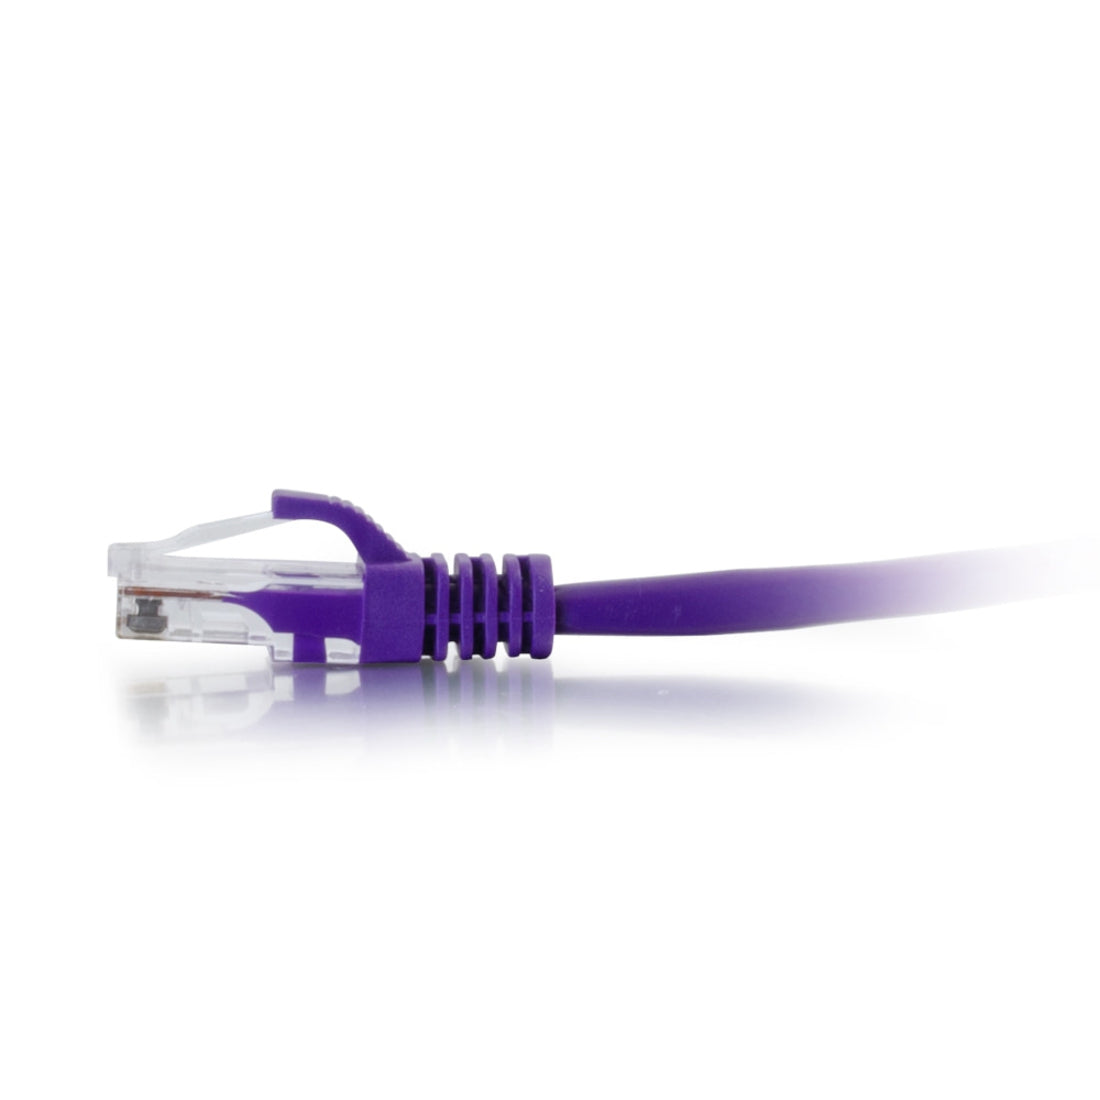 C2G 1ft Cat6a Unshielded Ethernet - Cat 6a Network Patch Cable - Purple